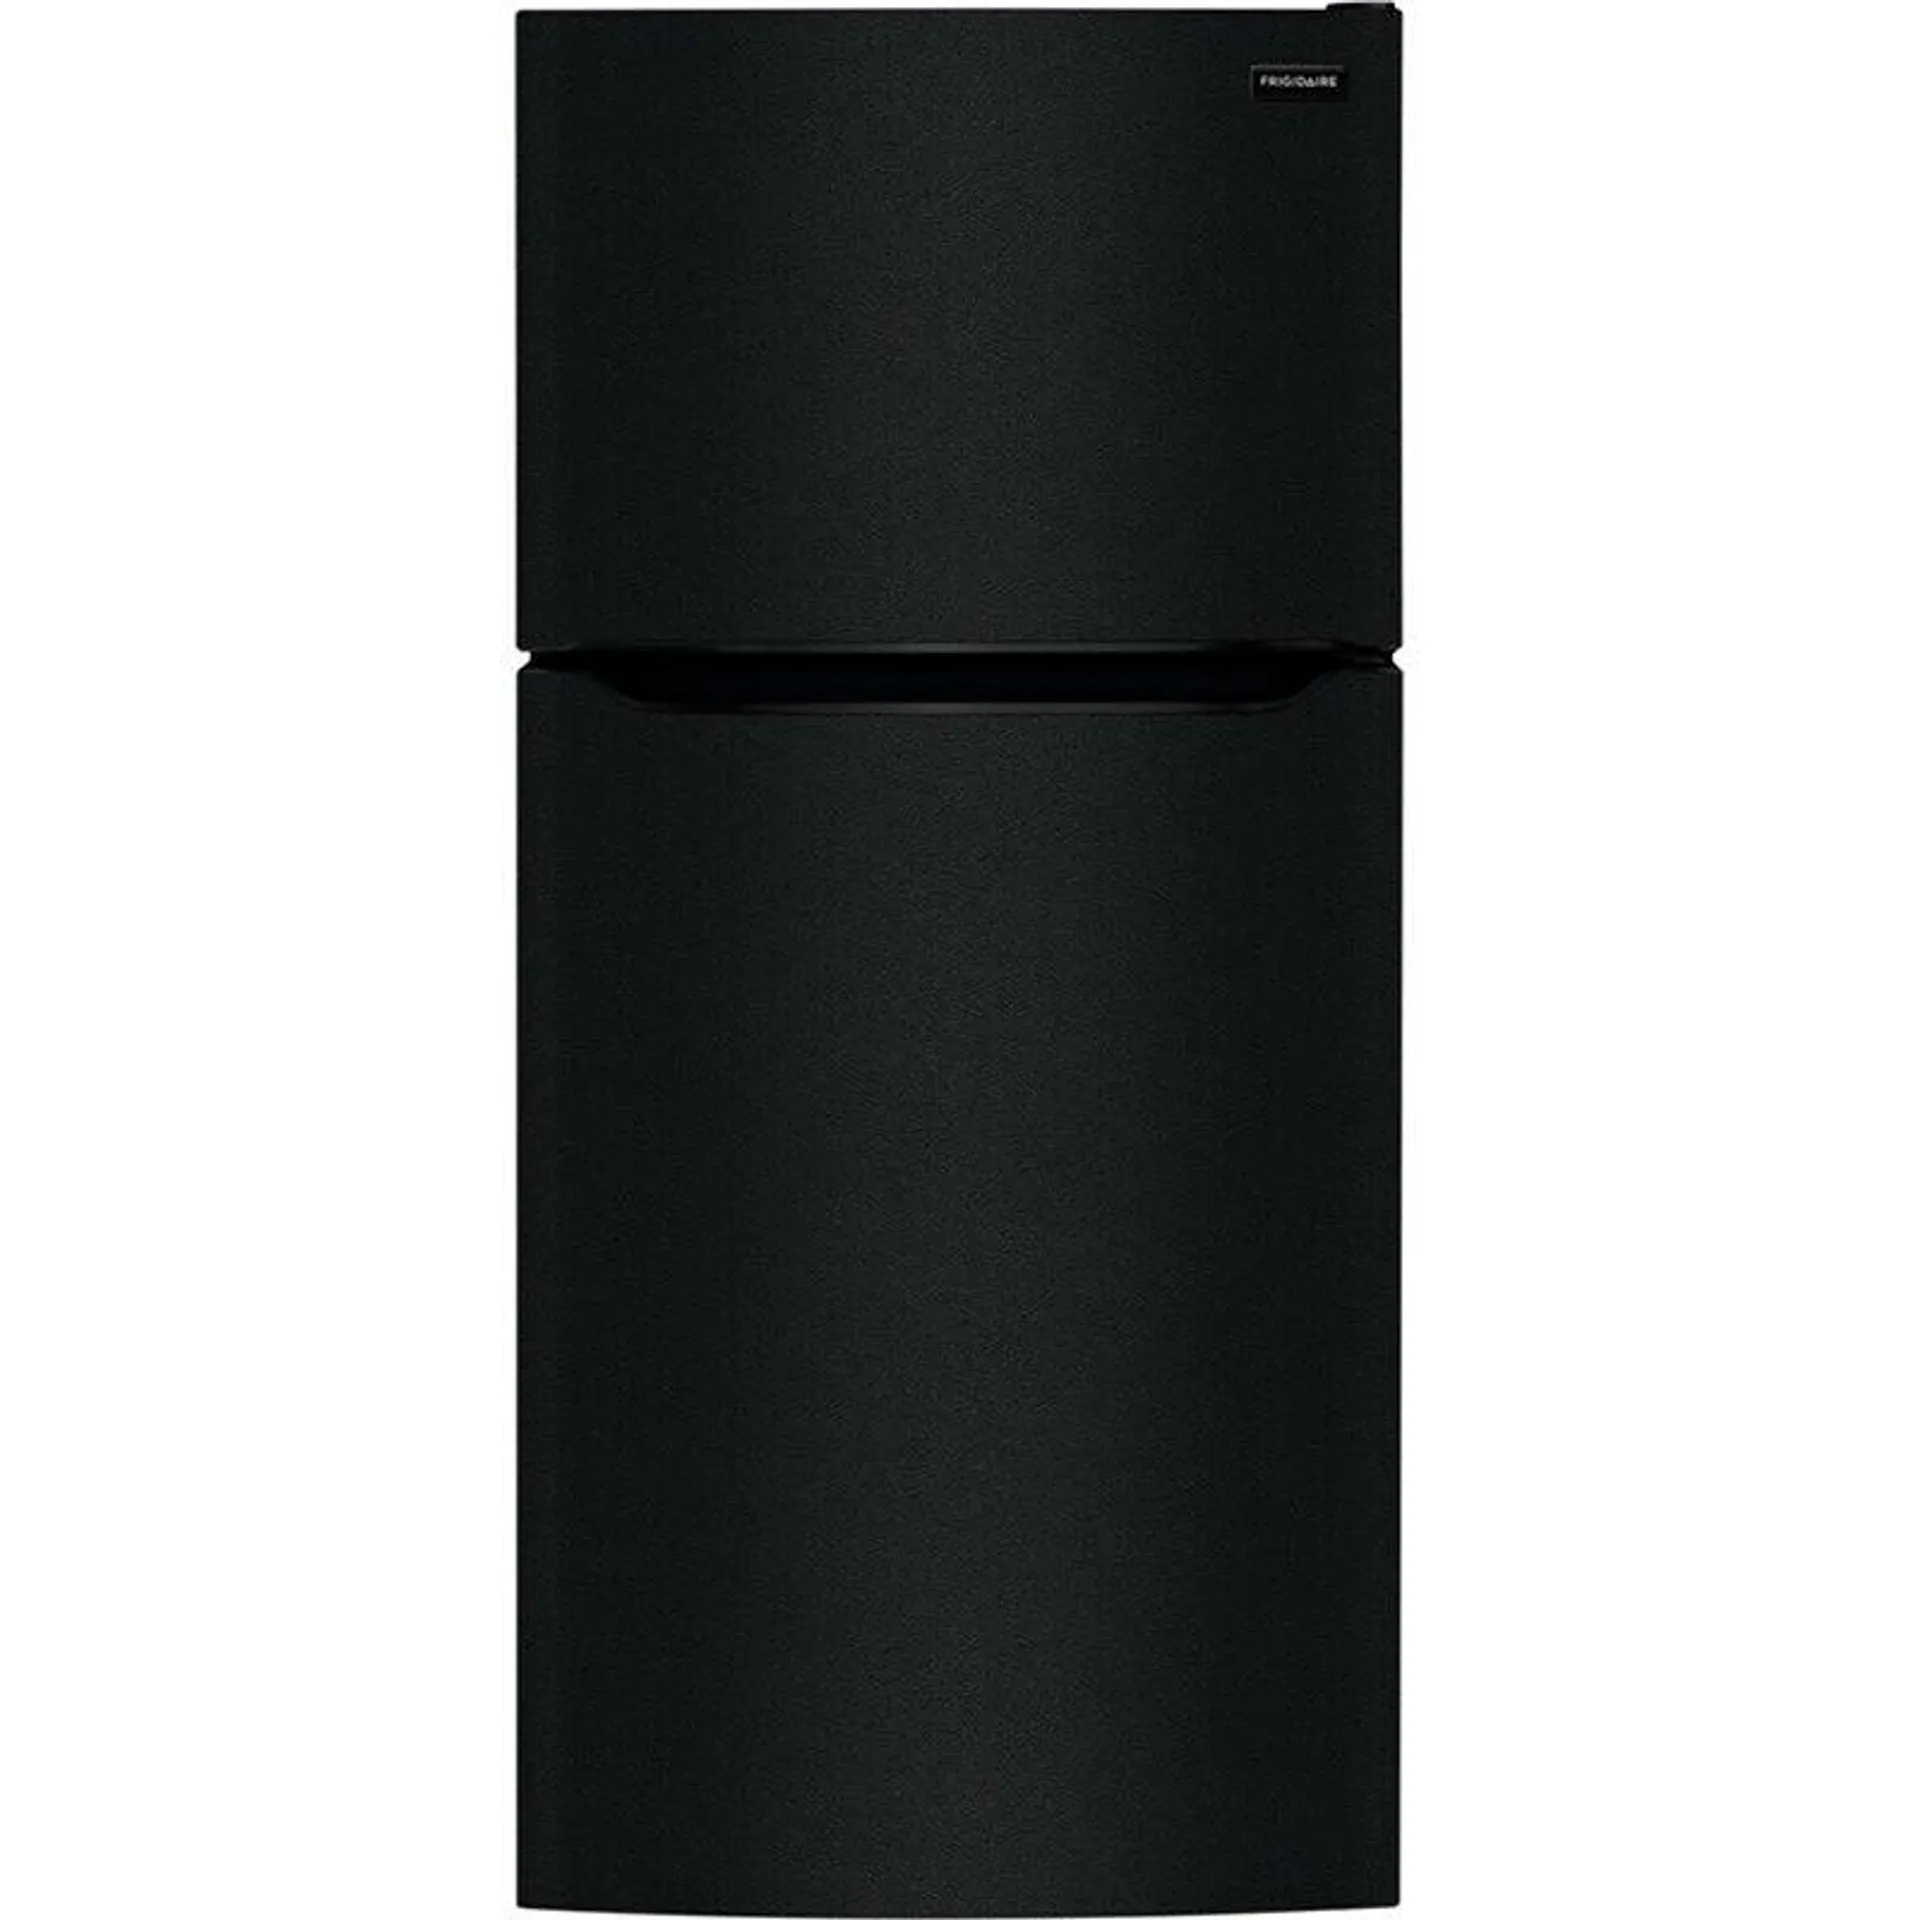 Frigidaire 30 in. 18.3 cu. ft. Top Refrigerator - Black